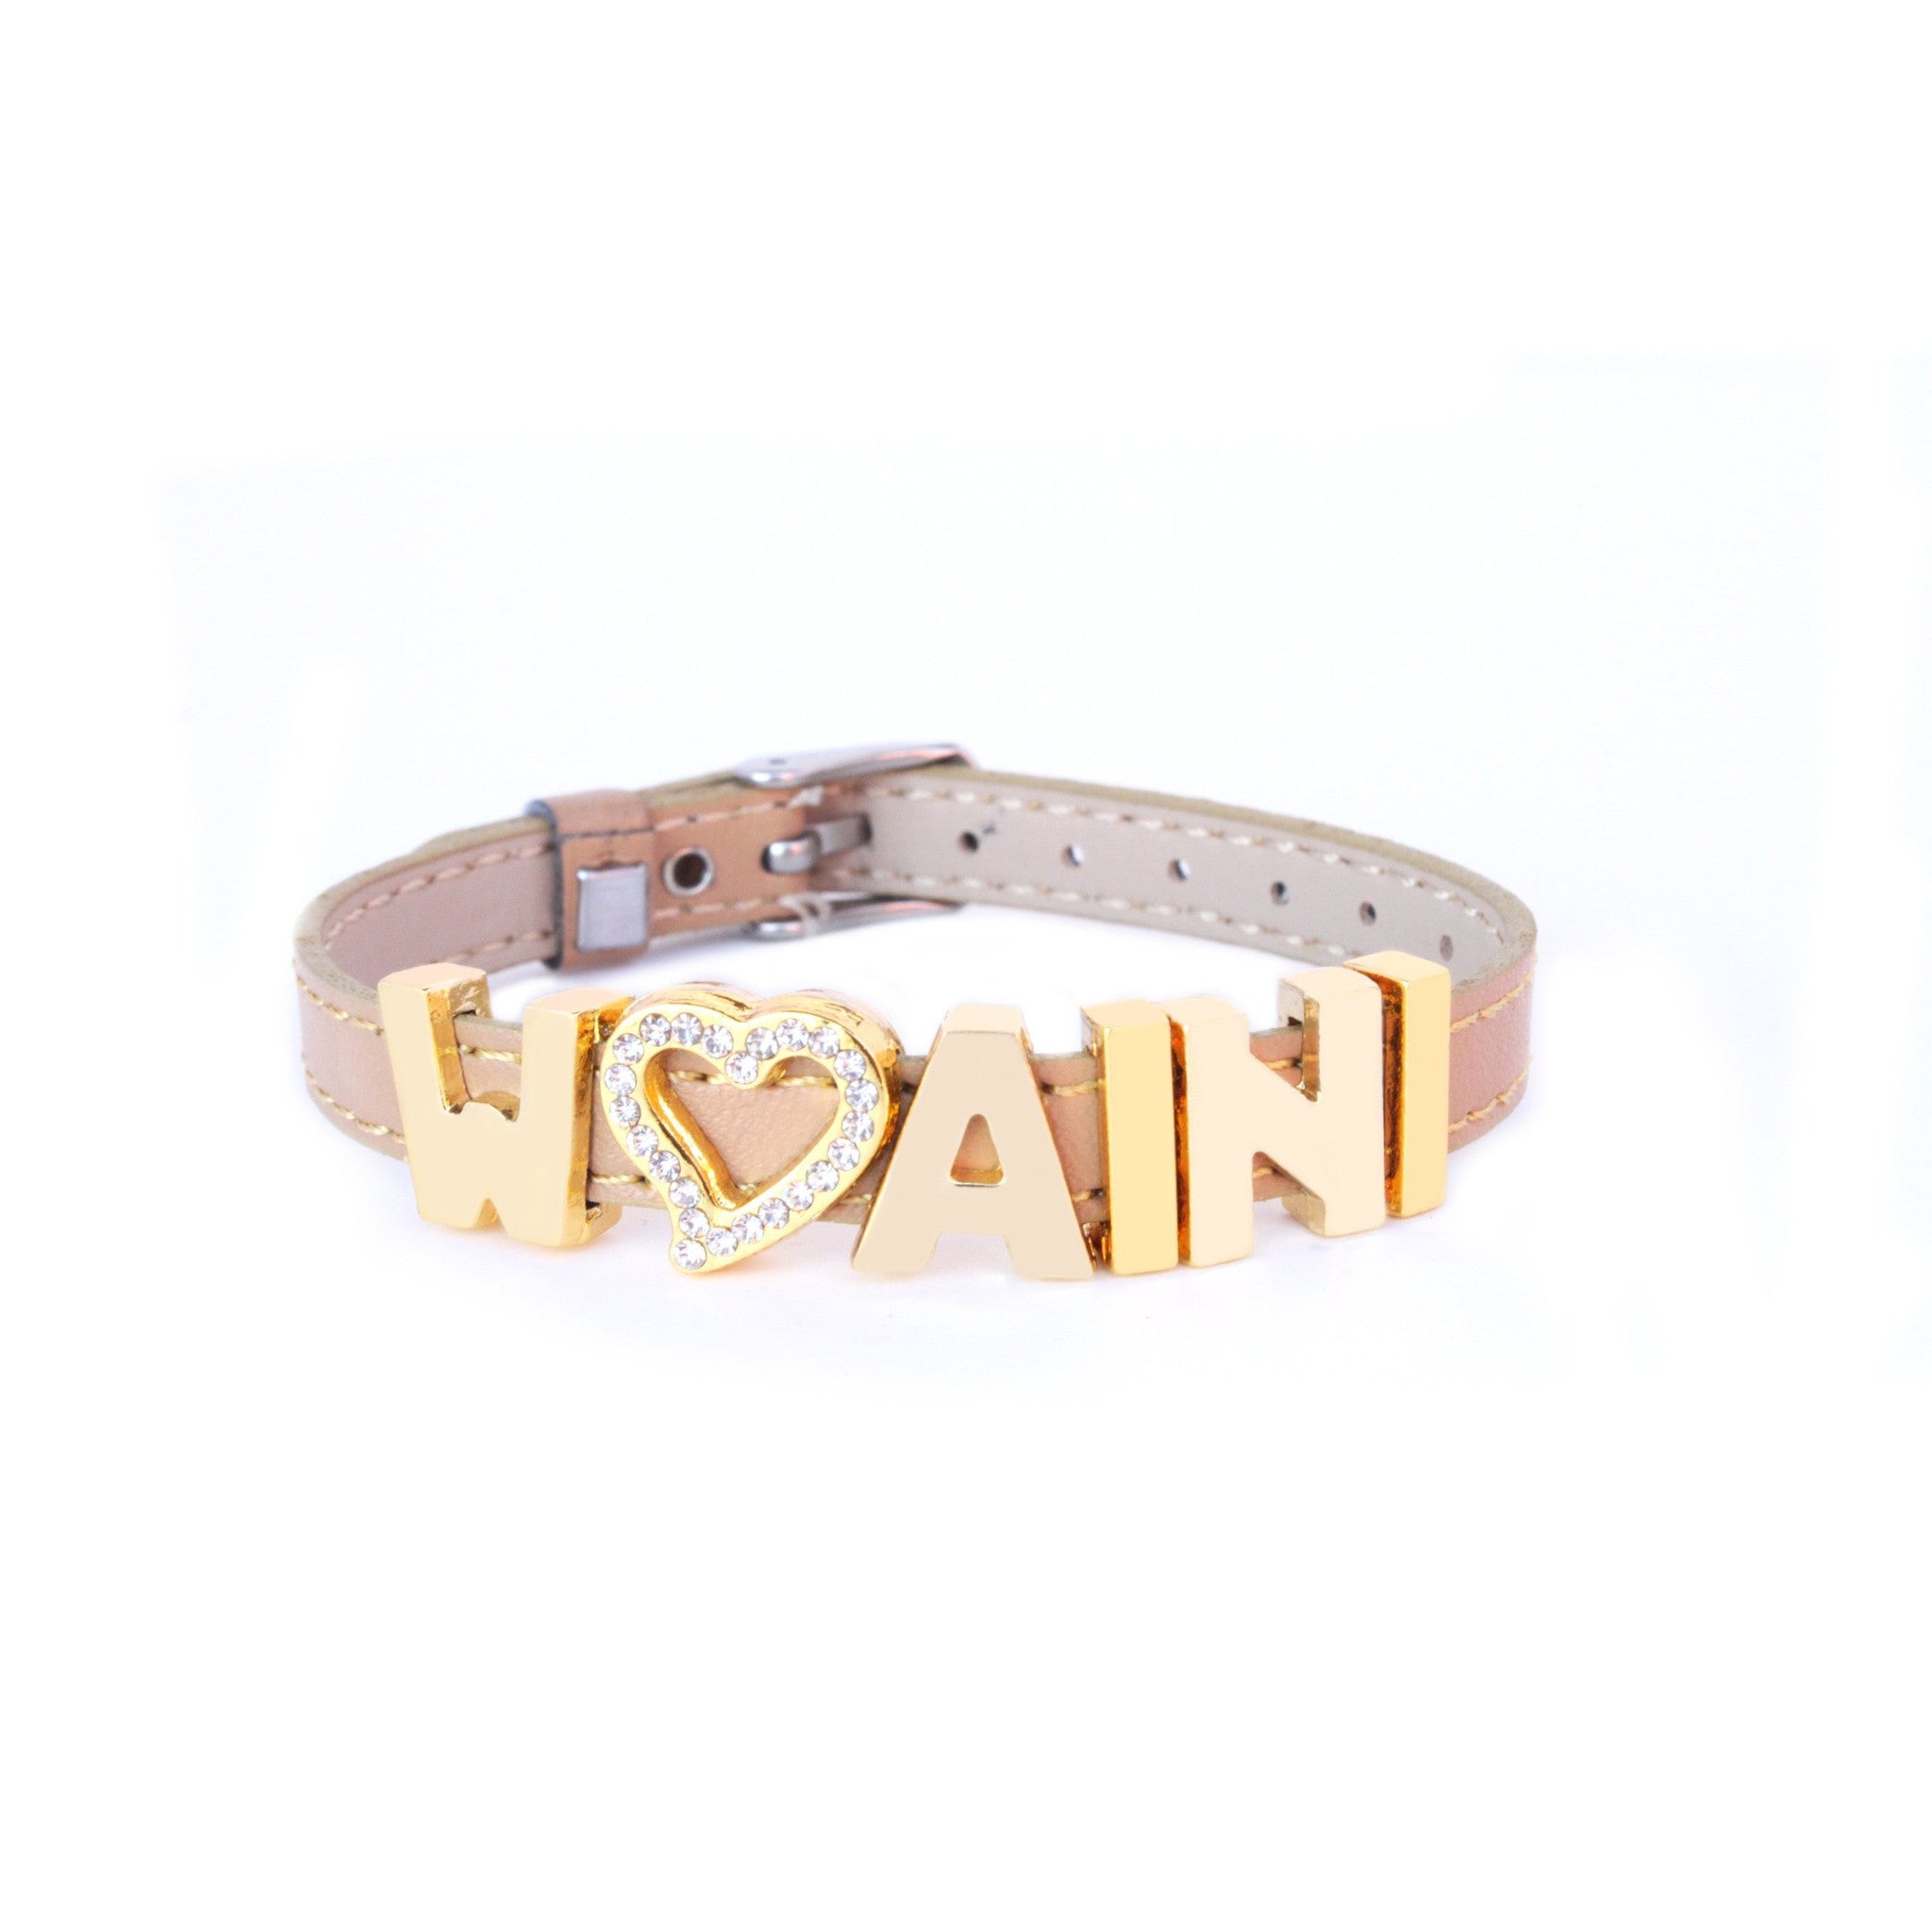 Slider Faux Leather Bracelet in Gold Letters (Love Across the World)